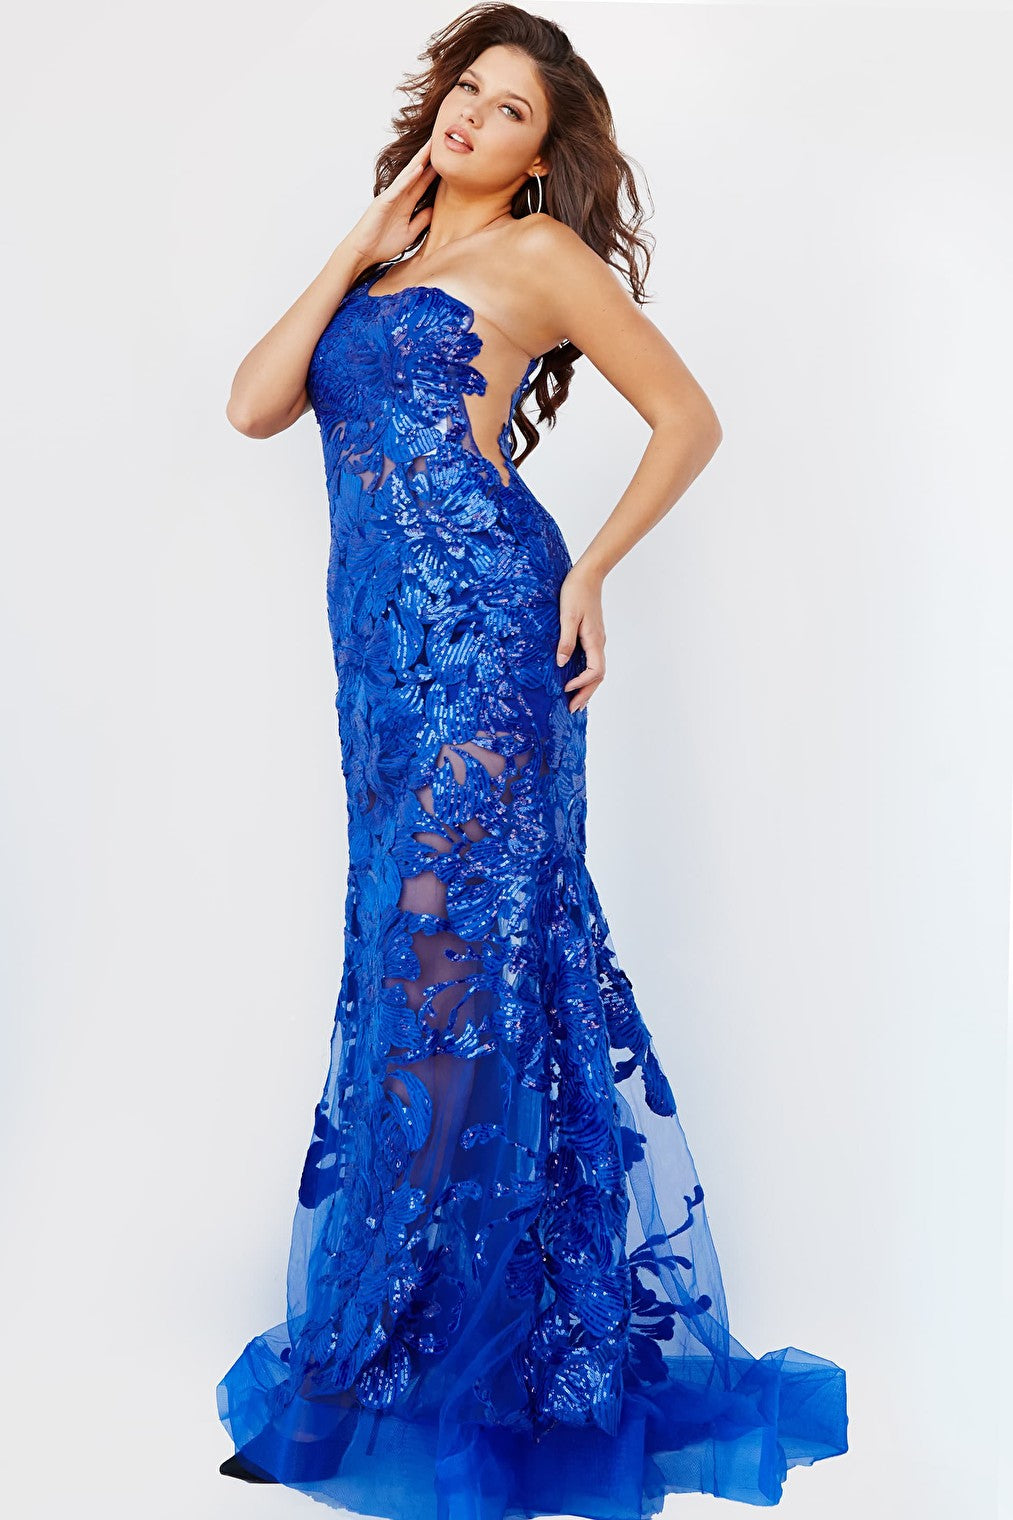 royal blue beaded dress 02895